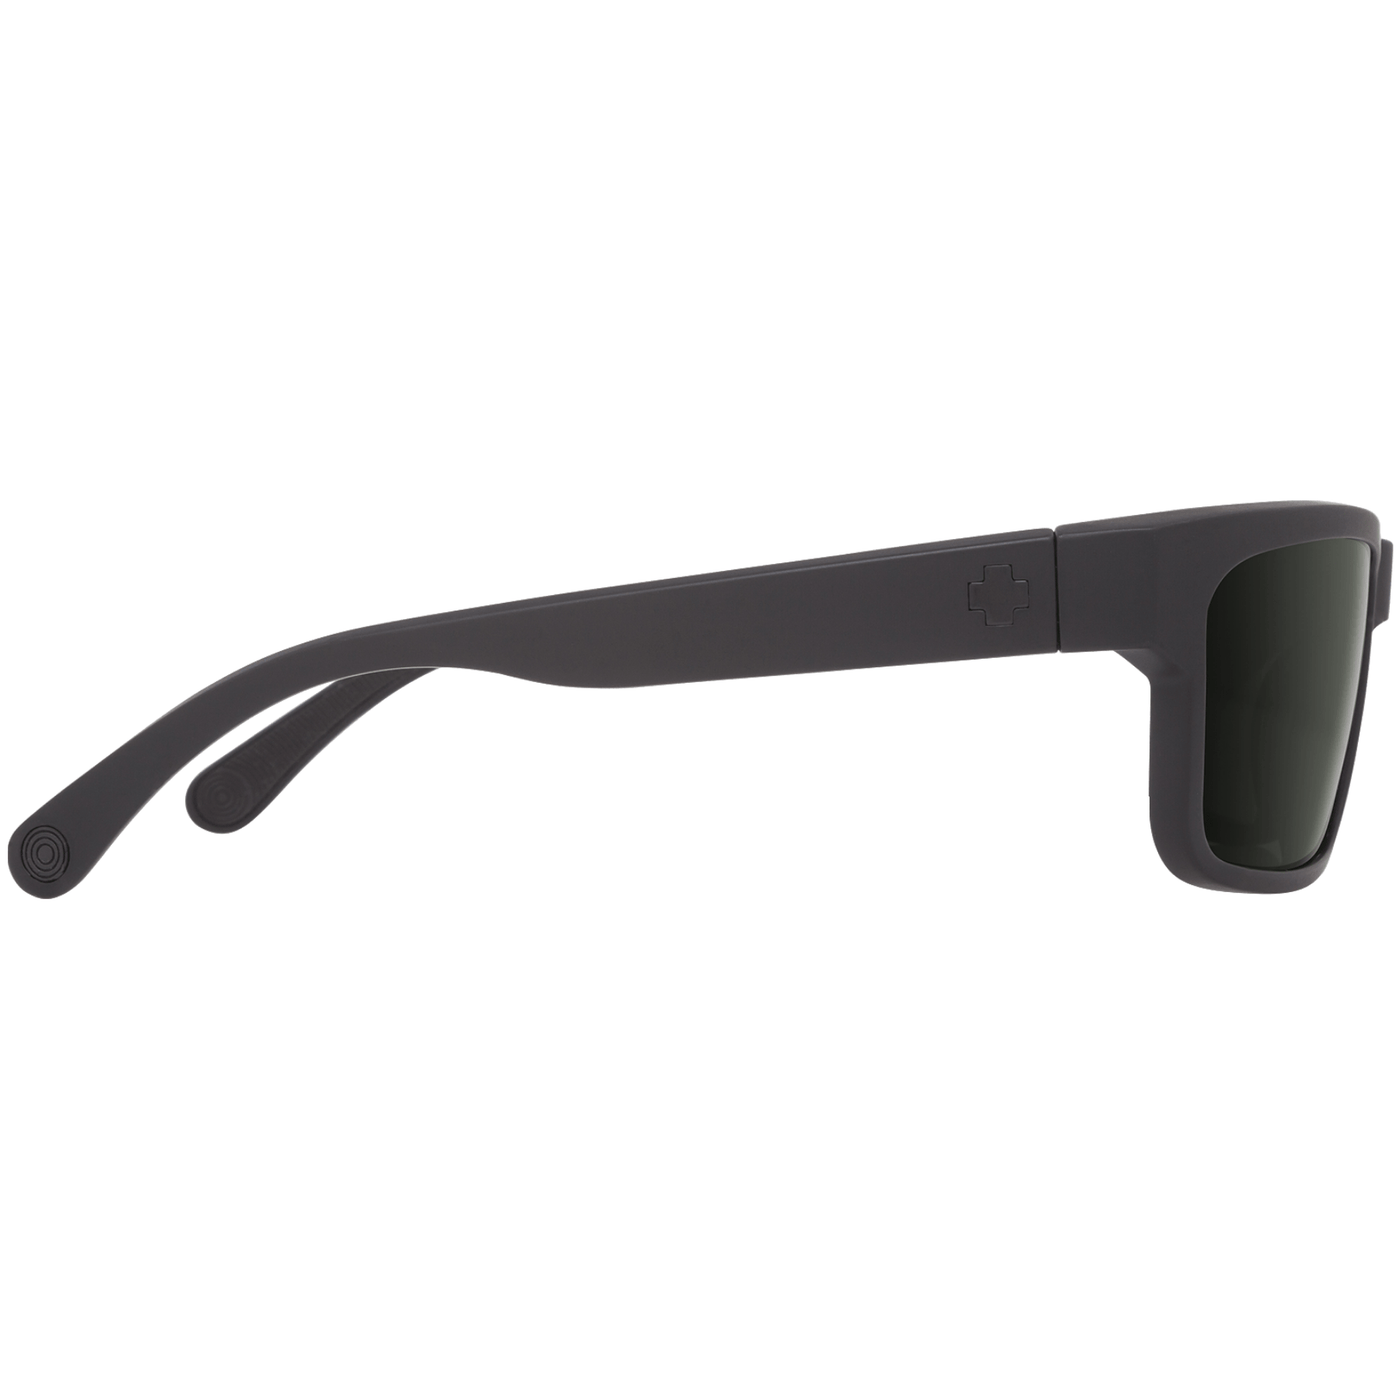 SPY FRAZIER SOSI Sunglasses - Matte Black Frame 8Lines Shop - Fast Shipping